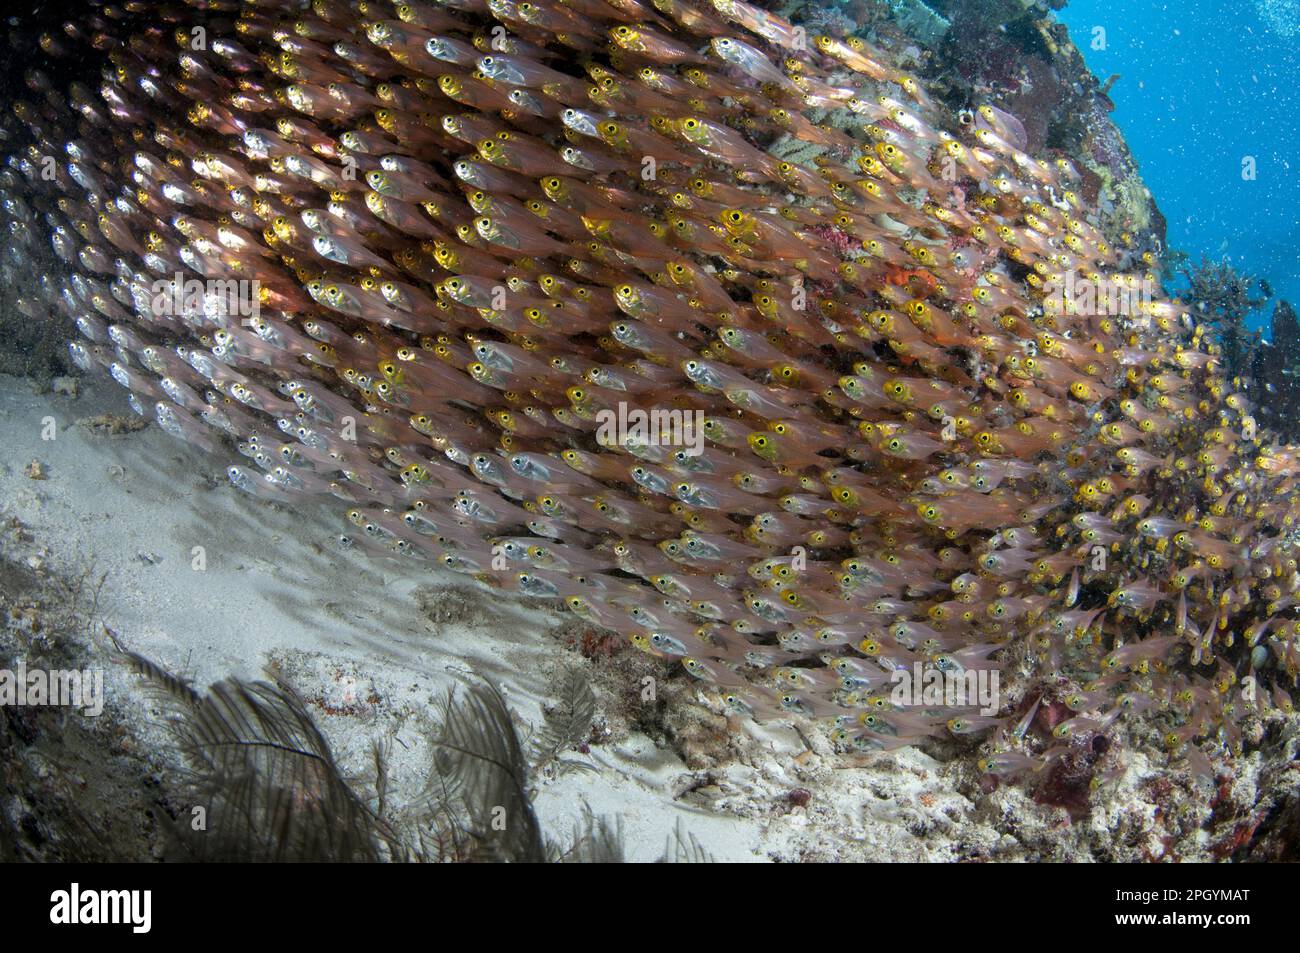 Golden pigmy sweeper (Parapriacanthus ransonneti) shoal, swimming in reef, Otdina Reef, Dampier Straits, Raja Ampat Islands (Four Kings), West Papua Stock Photo